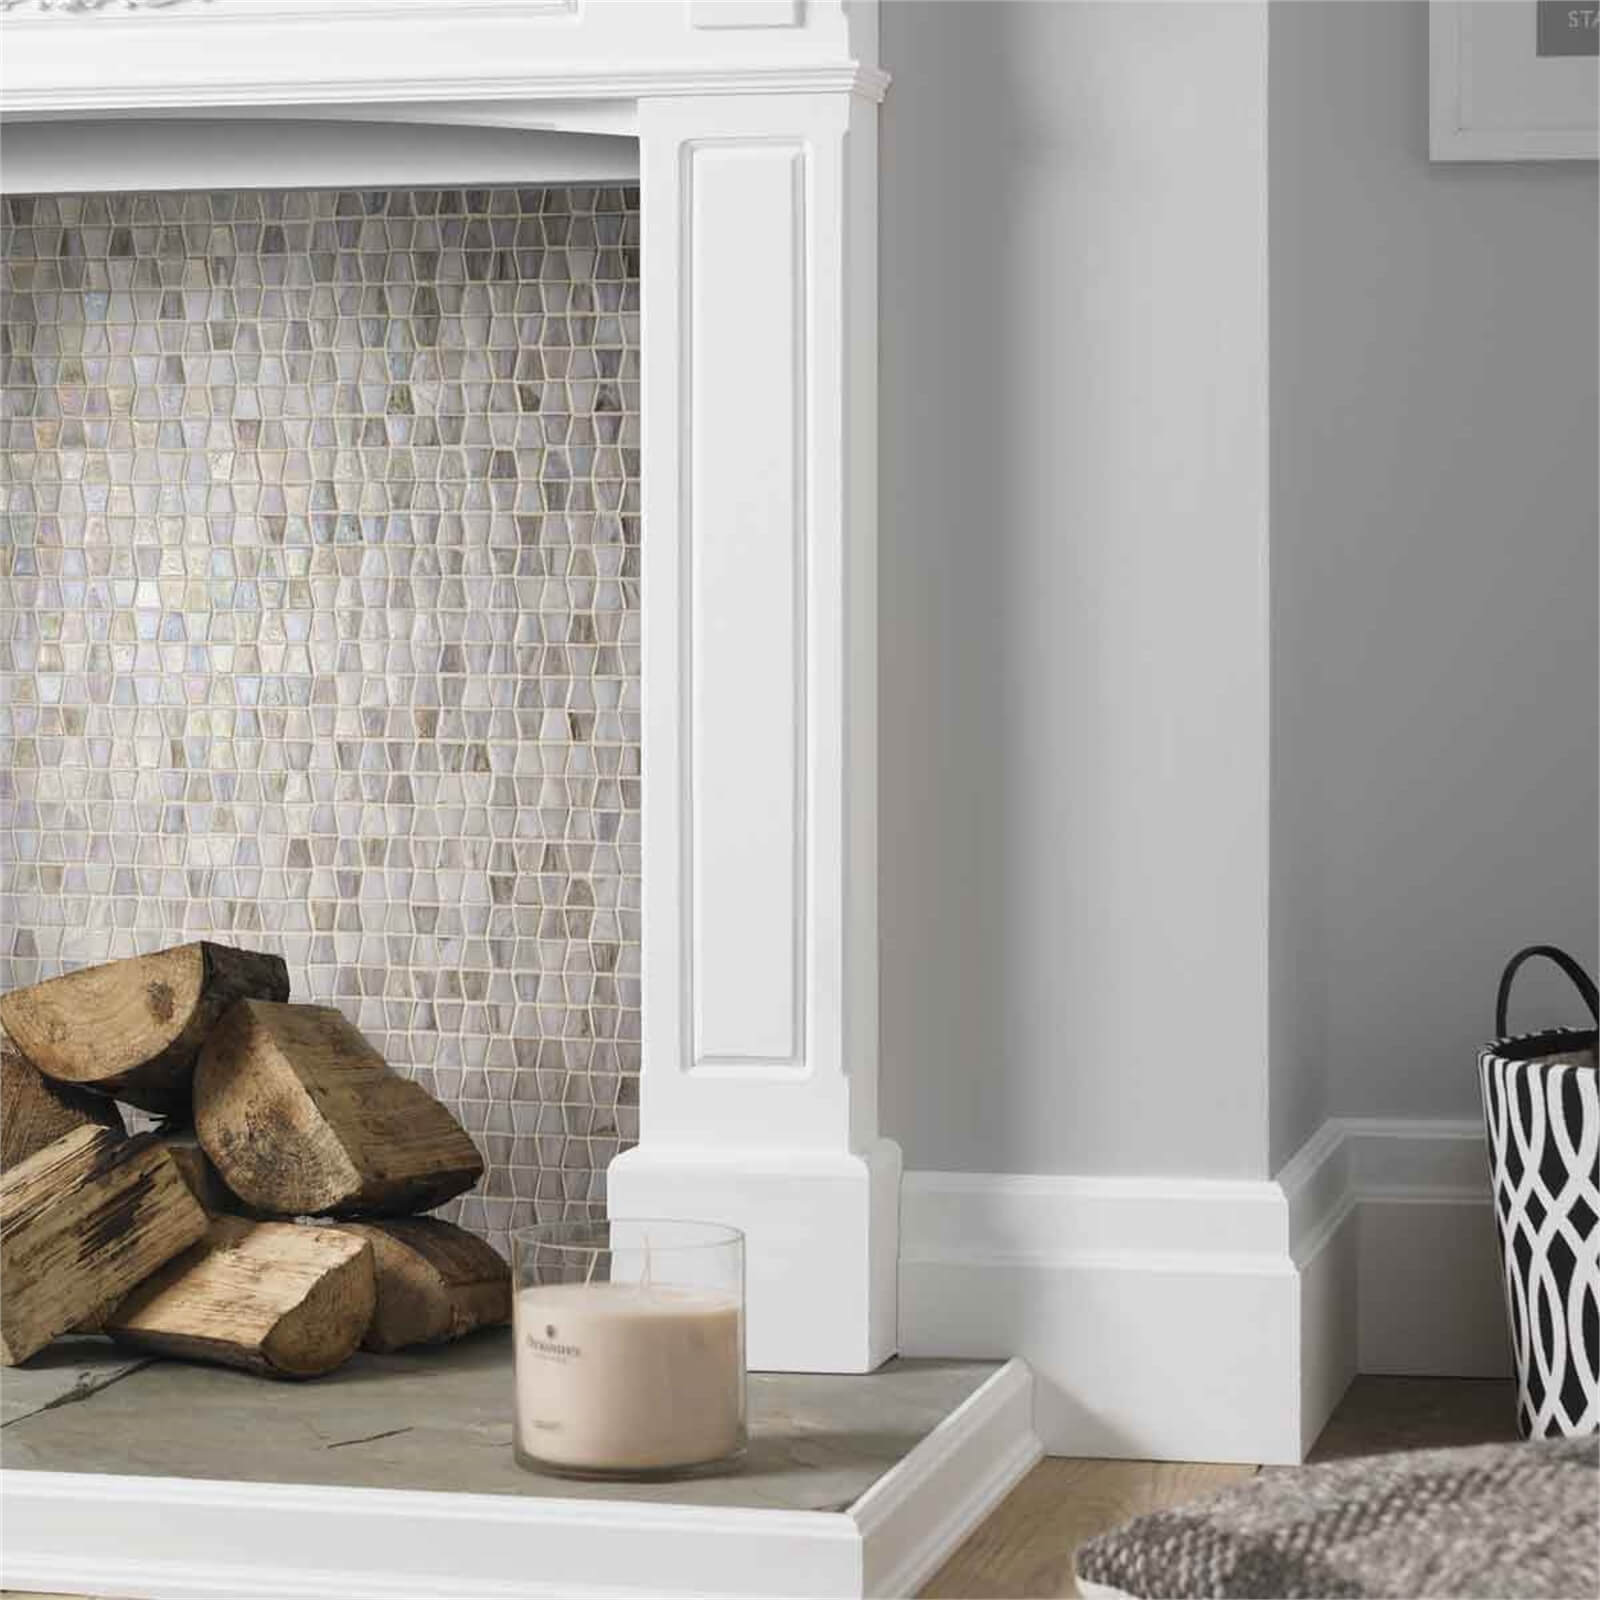 EOS Lustre Mosaic White Wall Tiles 300 x 300mm